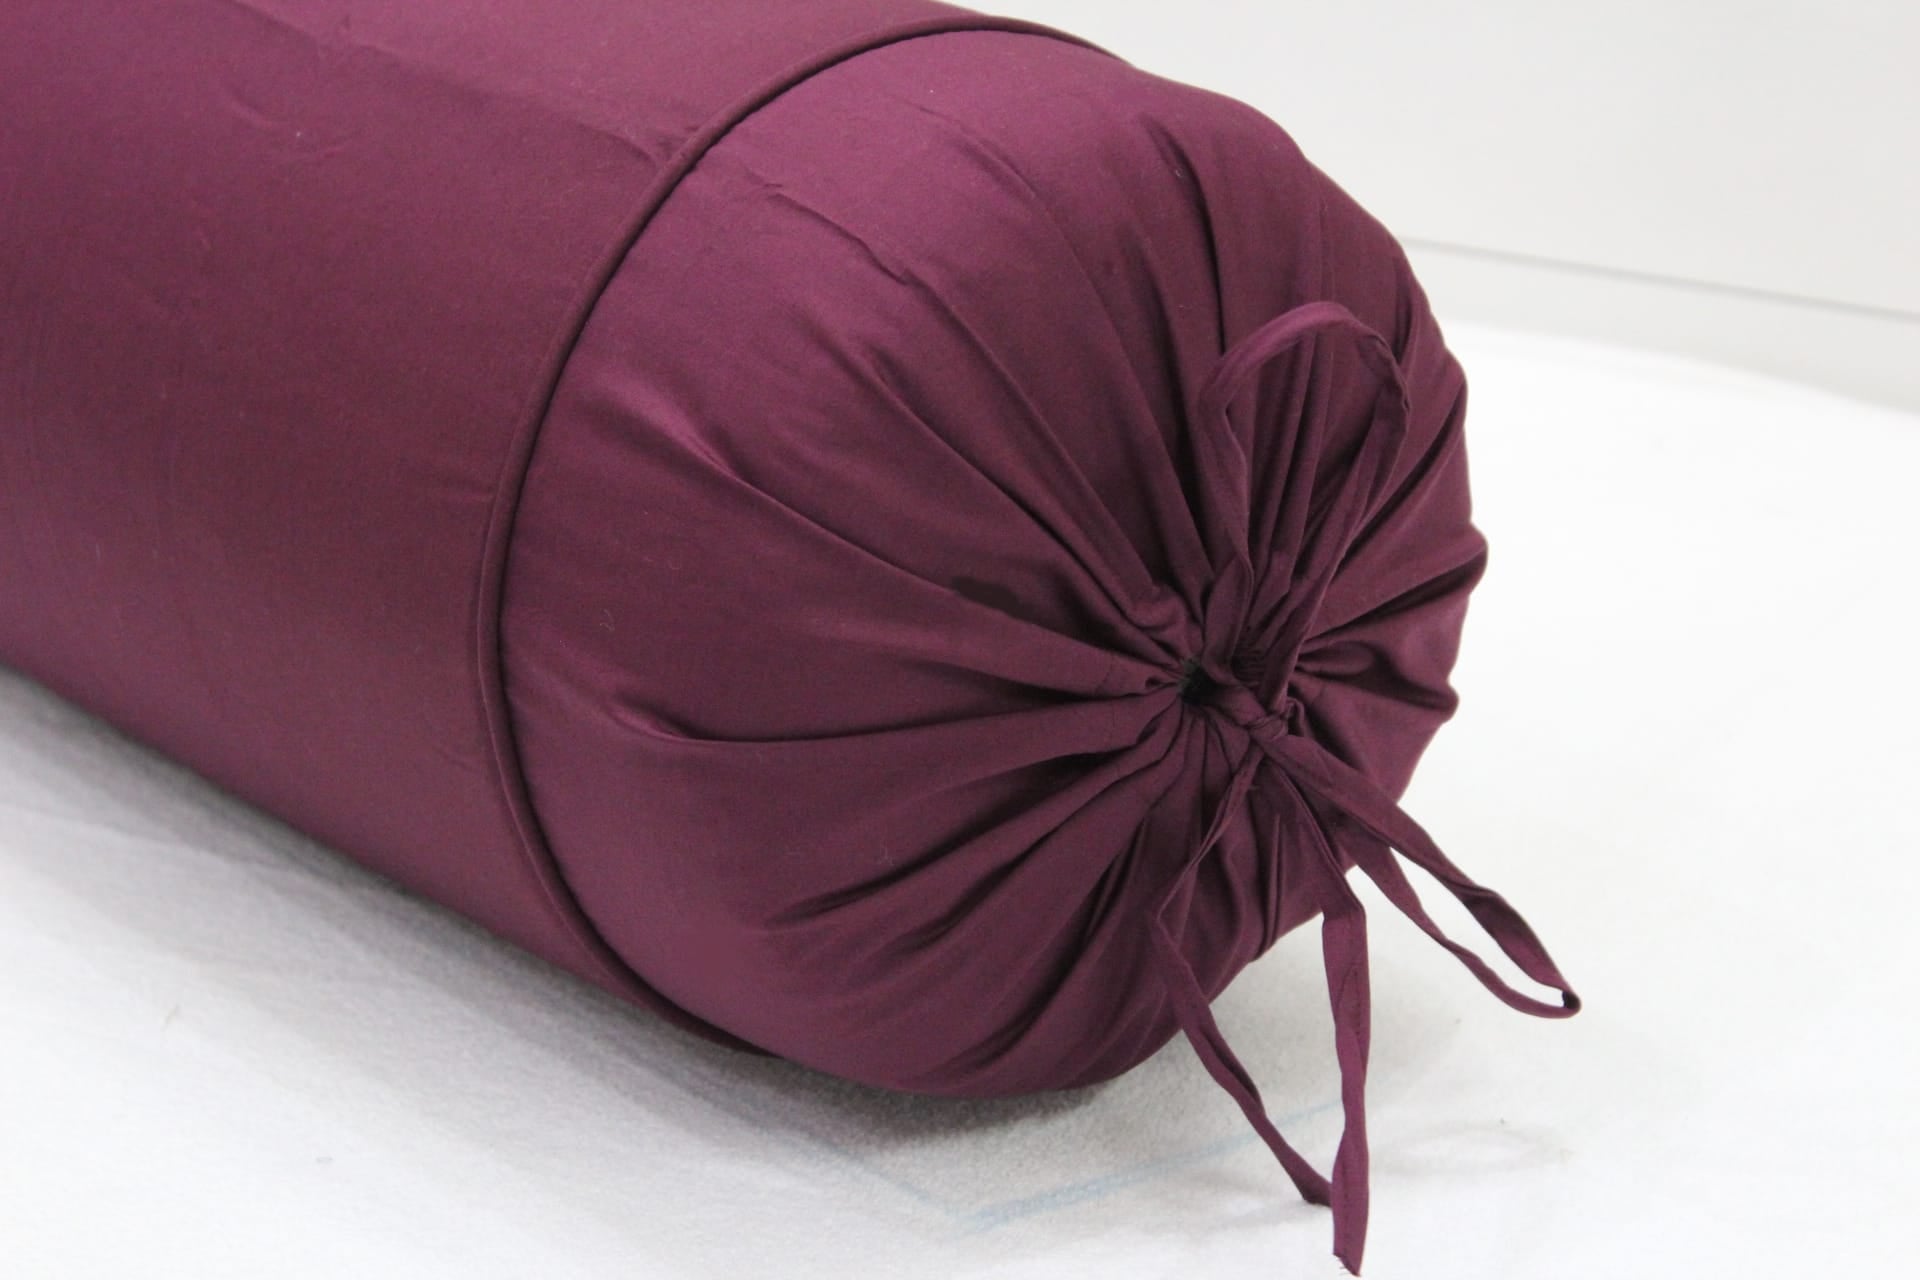 Comfortable Plain Cotton Bolster Cover Set 2pcs in Burgundy online